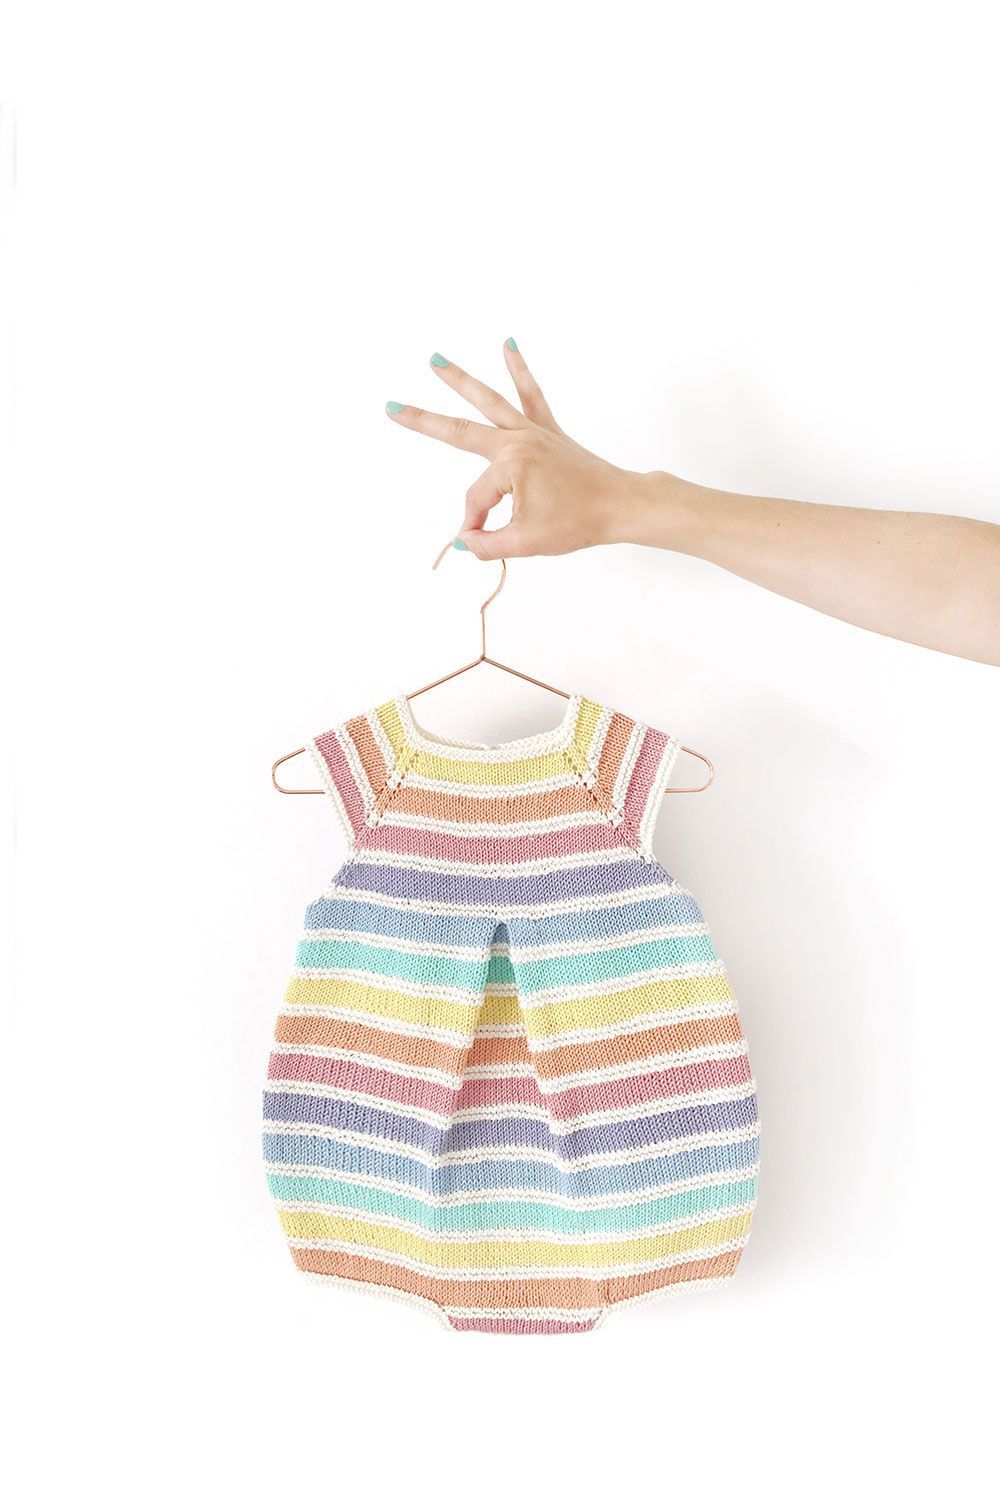 Knitted Rainbow Romper DIY Free Pattern & Tutorial